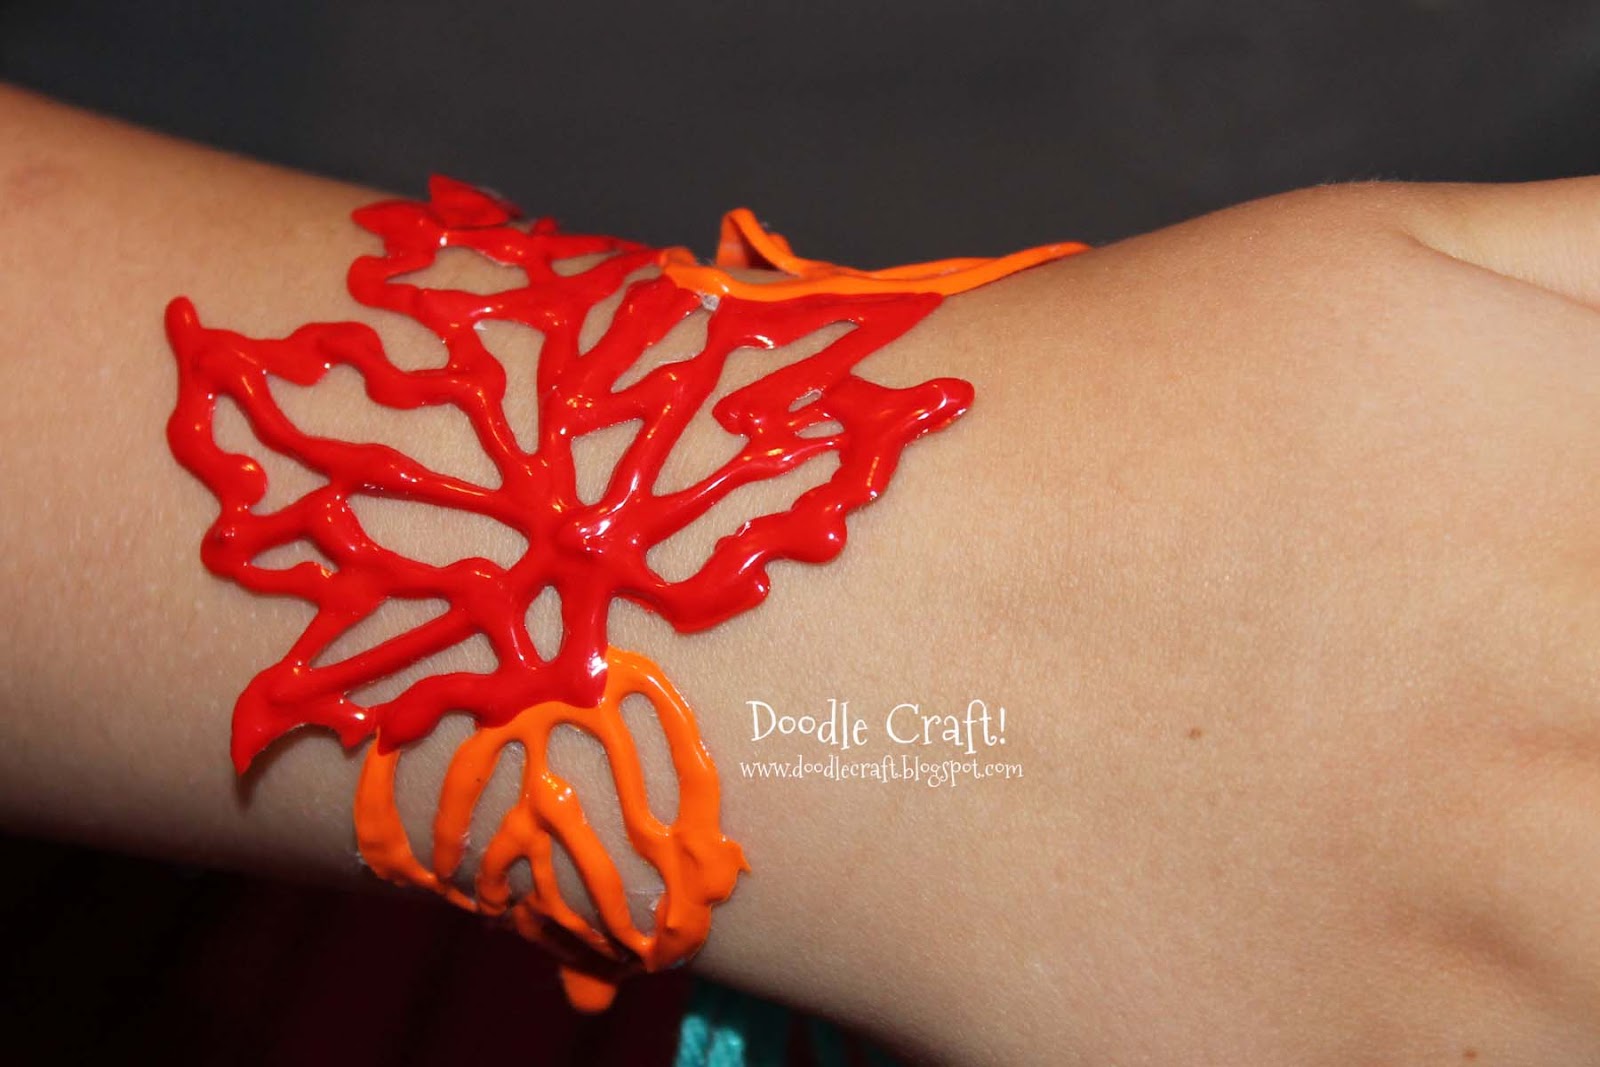 DIY Fabric/Puffy Paint Bracelet Tutorial